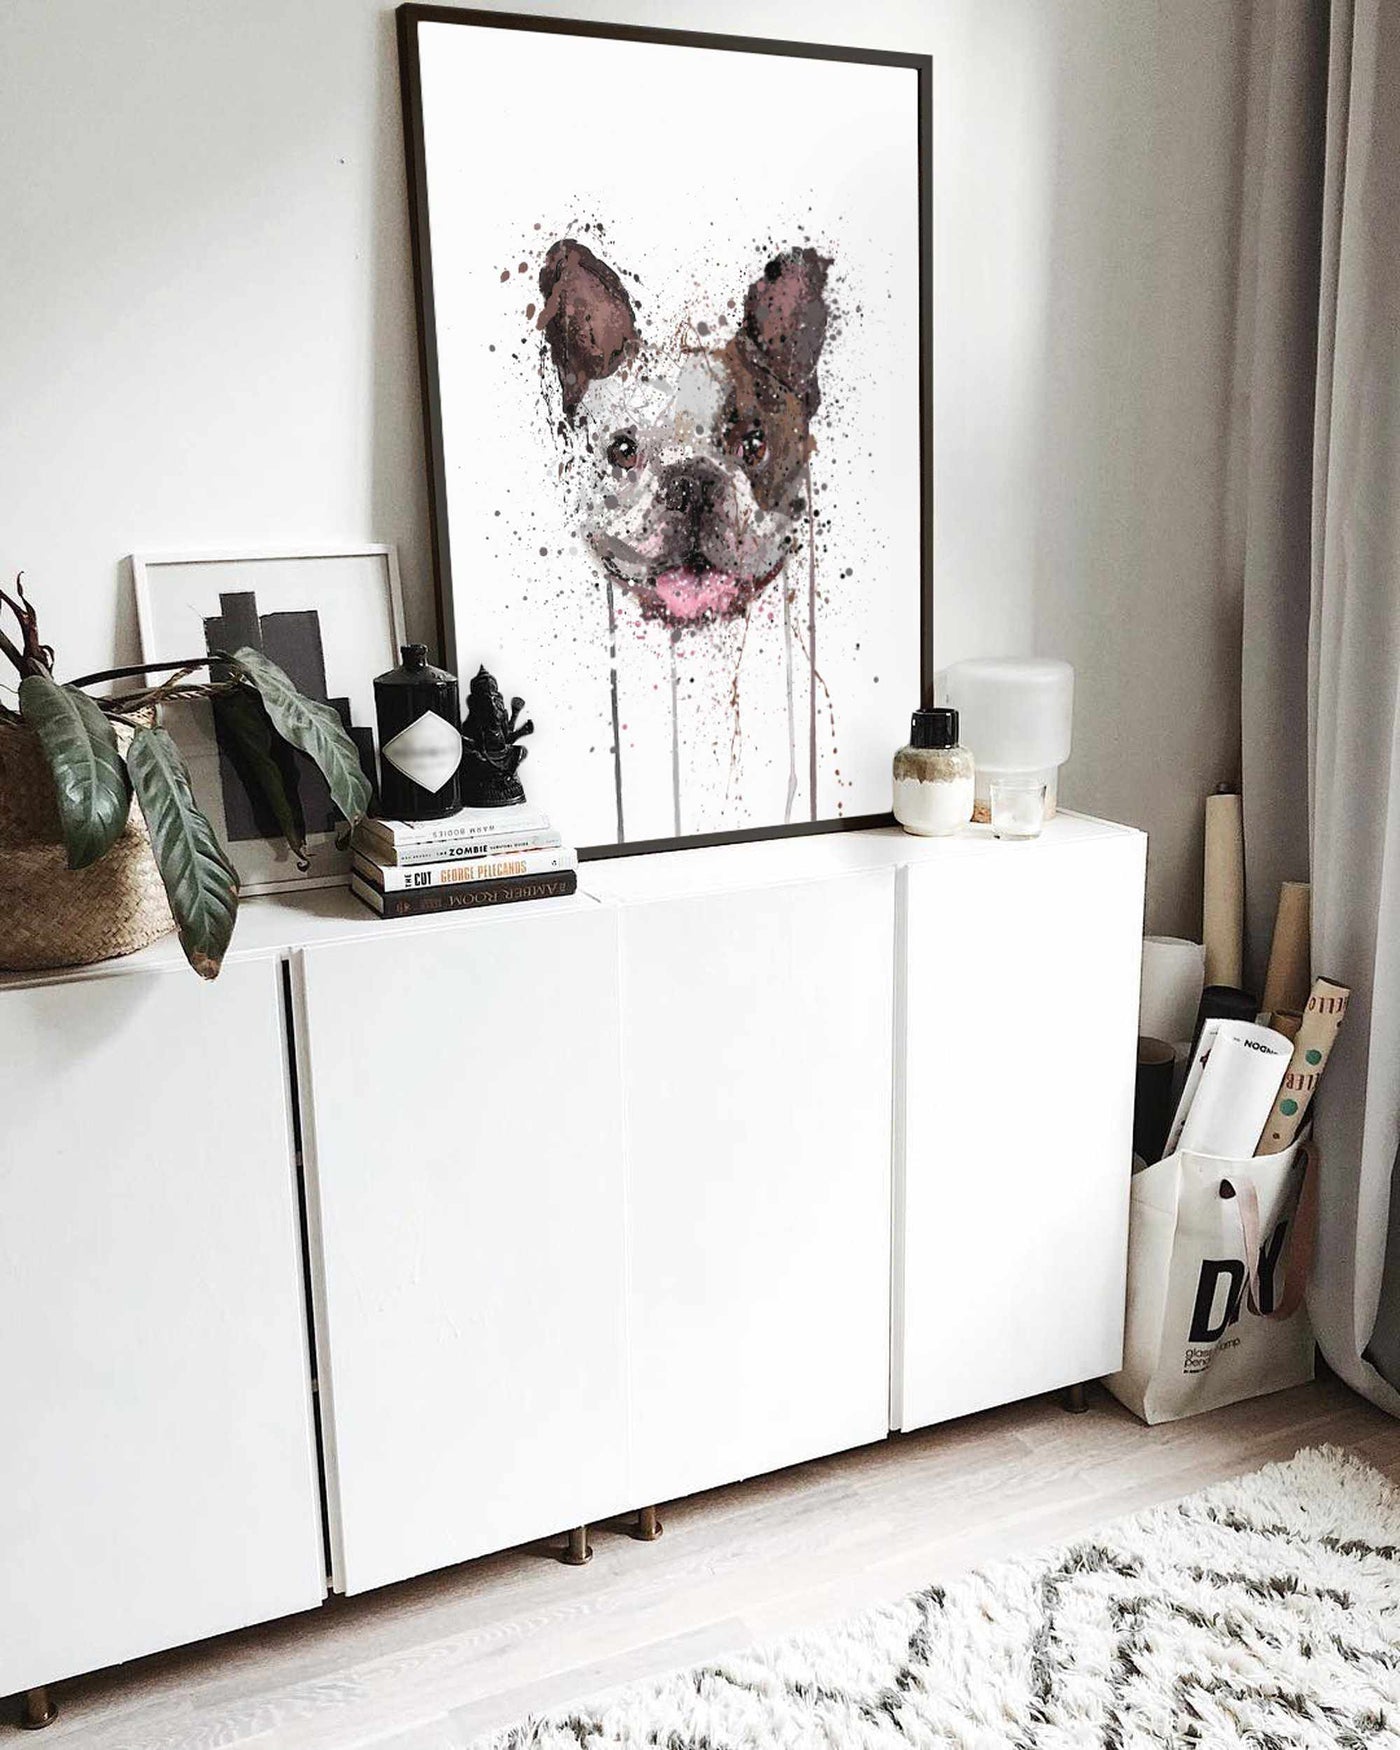 French Bulldog Wall Art Print (Light)